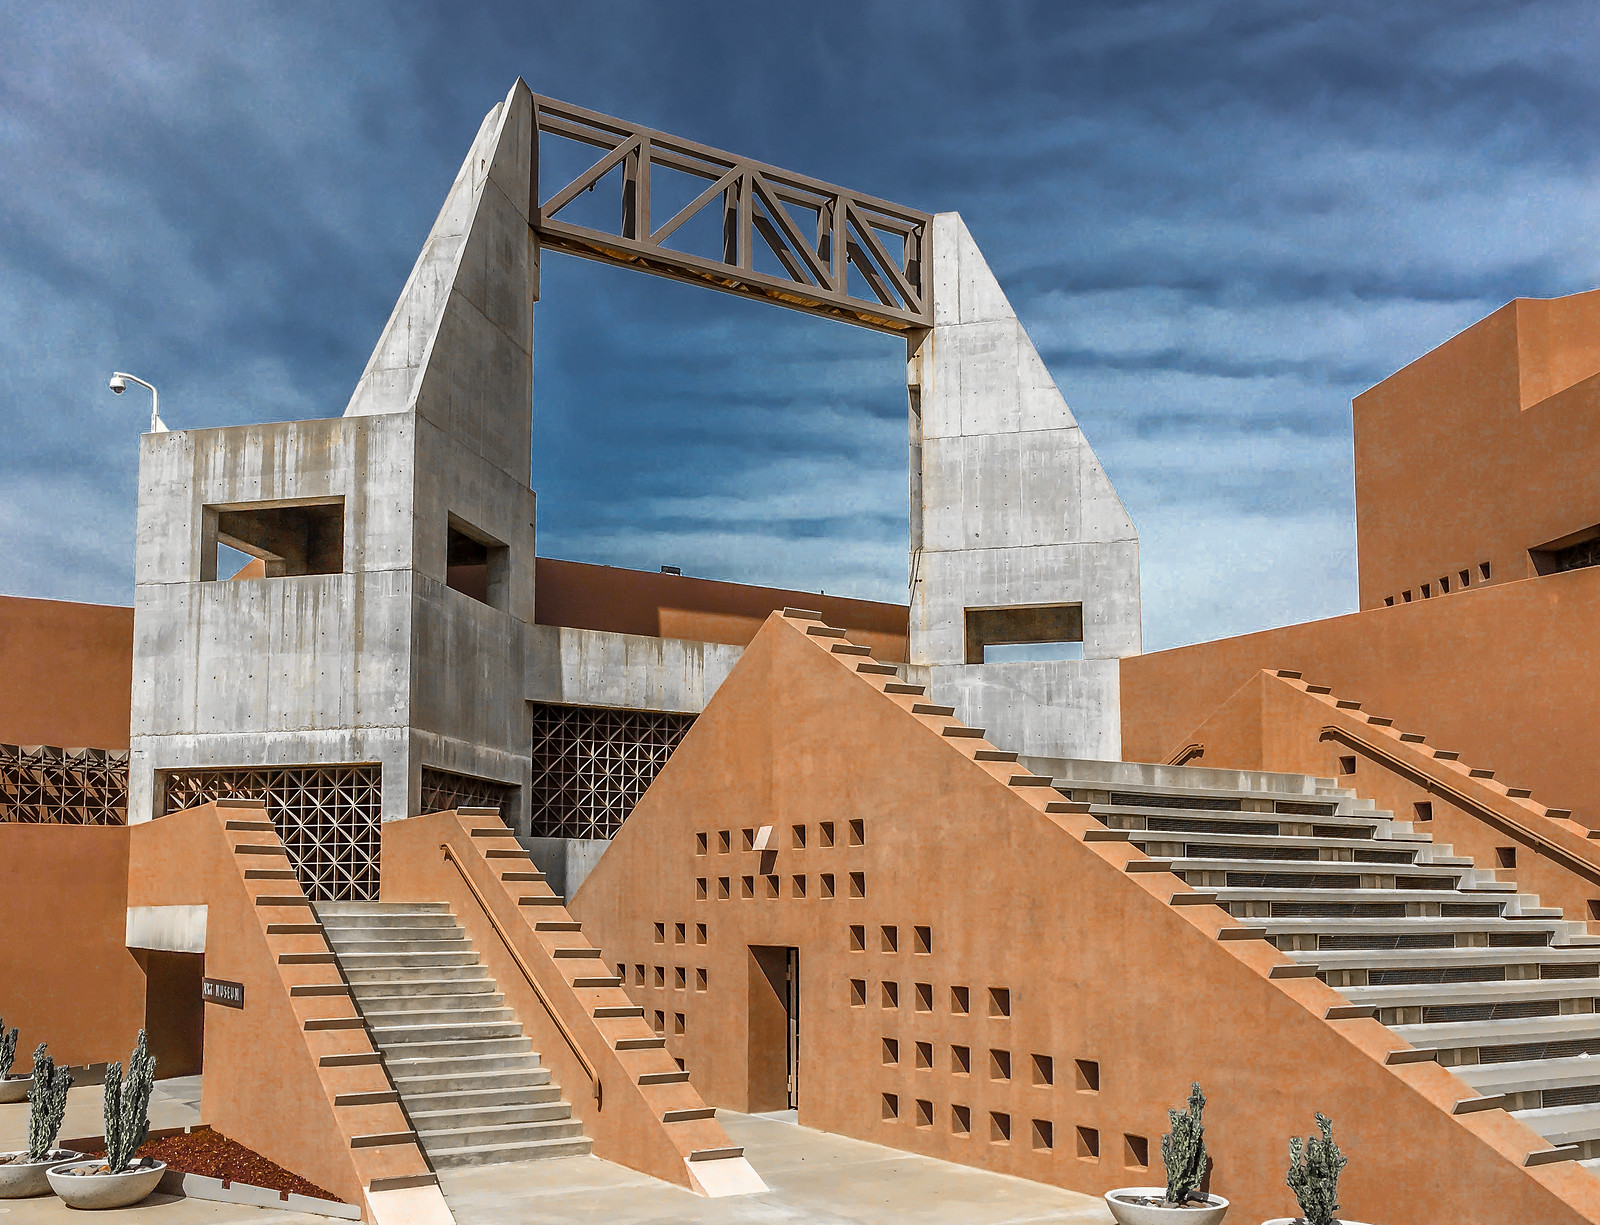 Futuristic architecture painted desert brown or left gray concrete in Tempe, Arizona